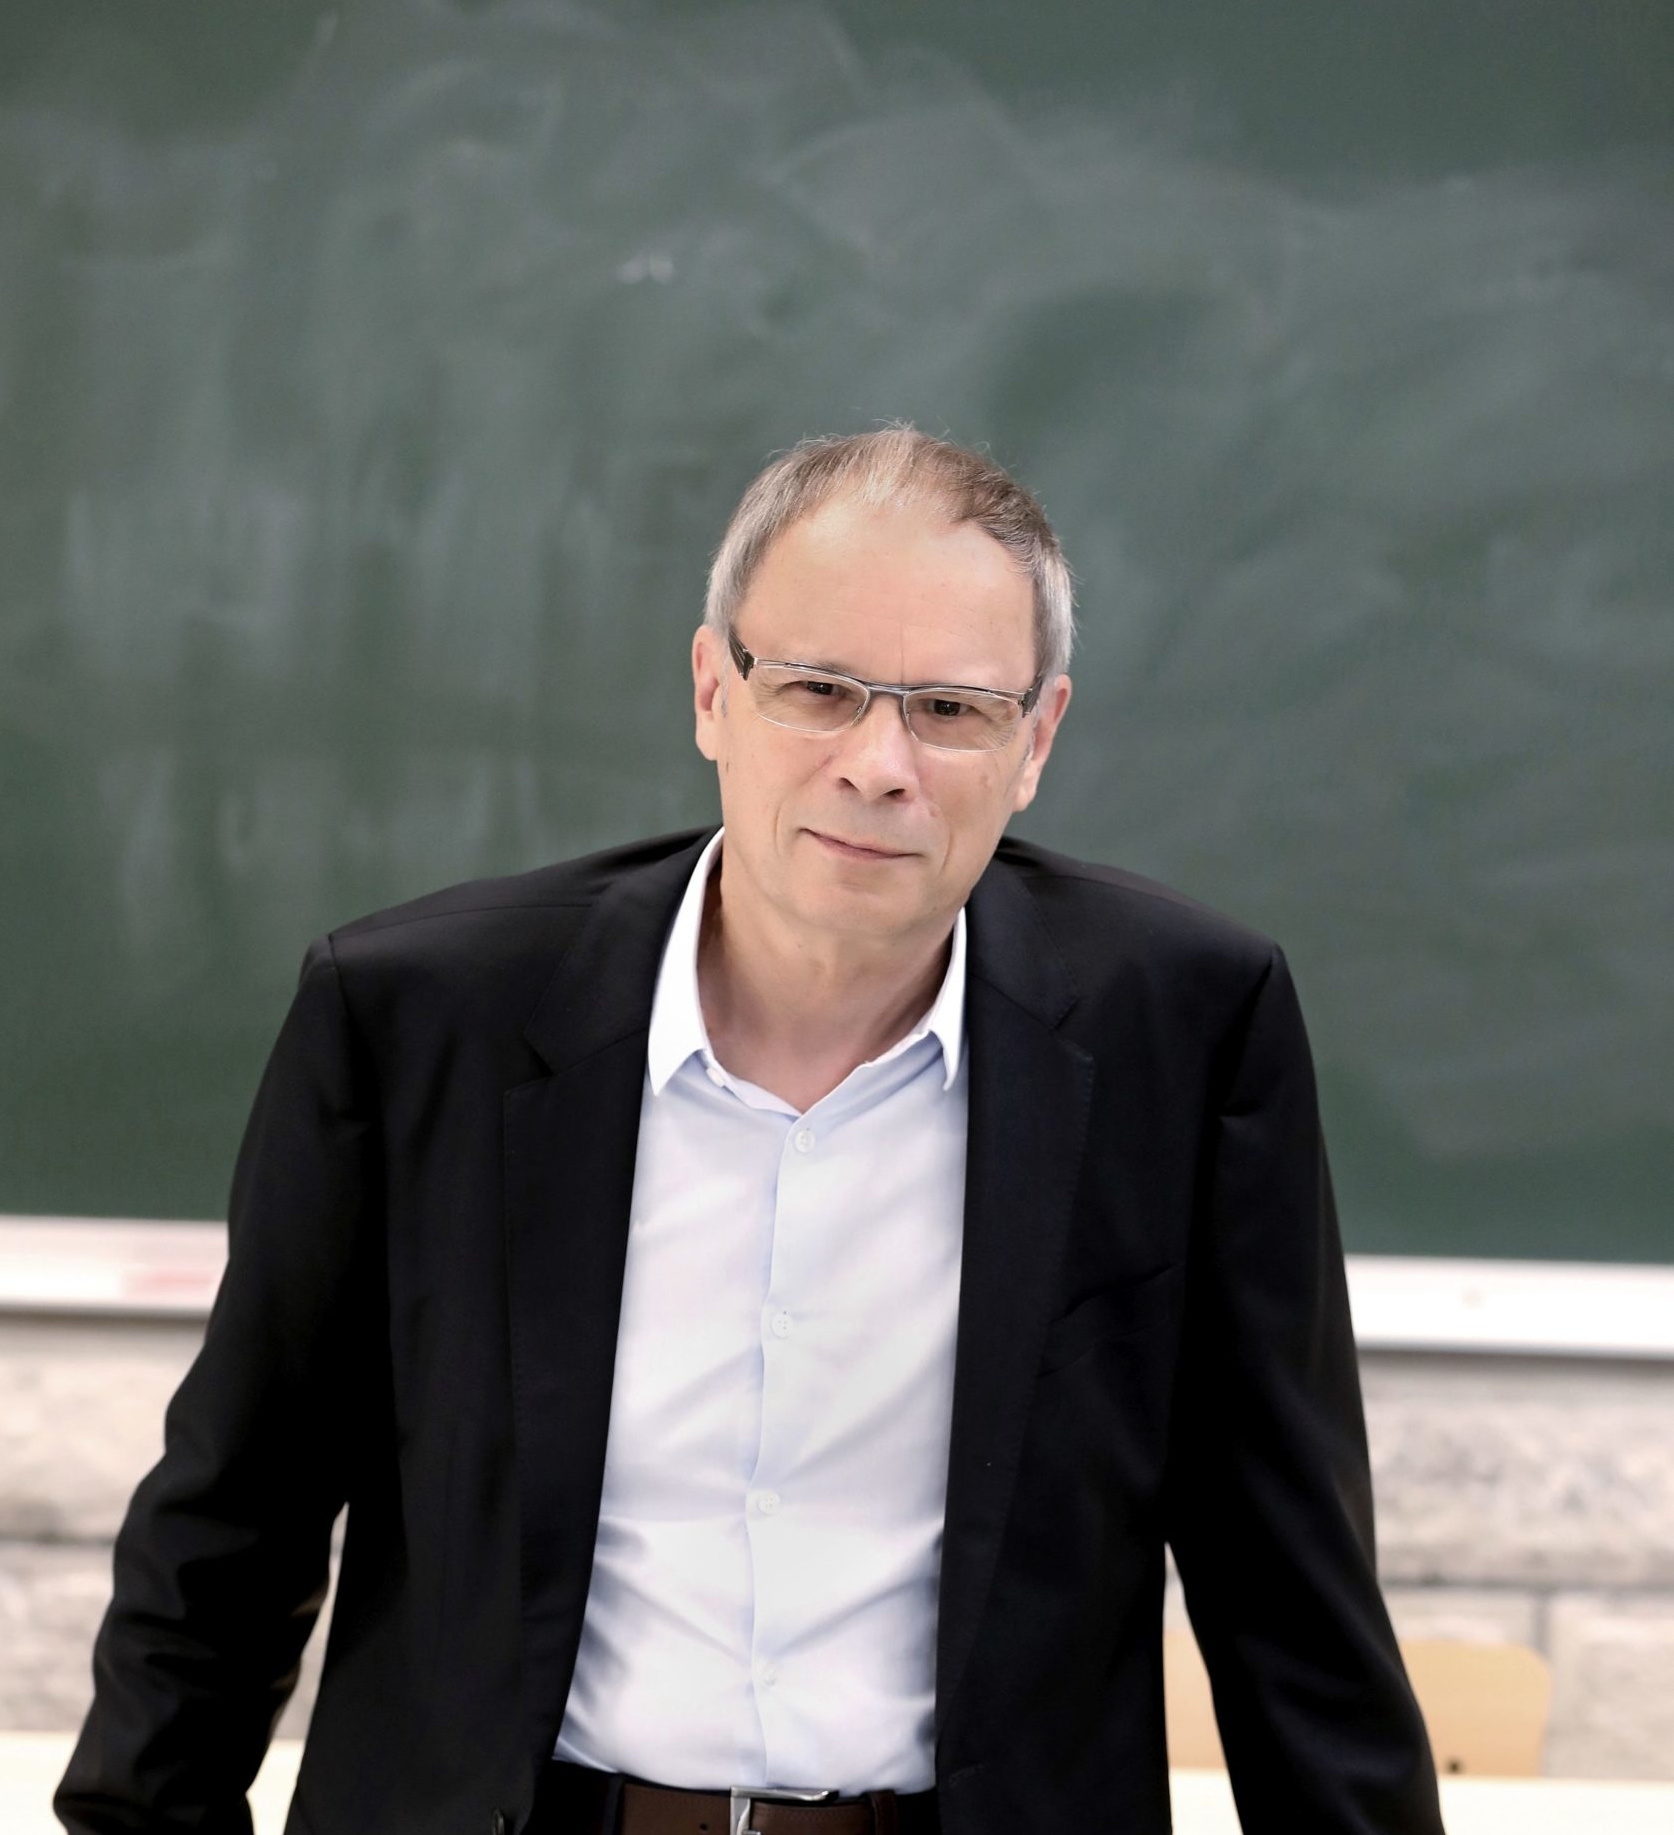 VŠE will award prof. Jean Tirole the degree Doctor Honoris Causa based on FIR´s proposal